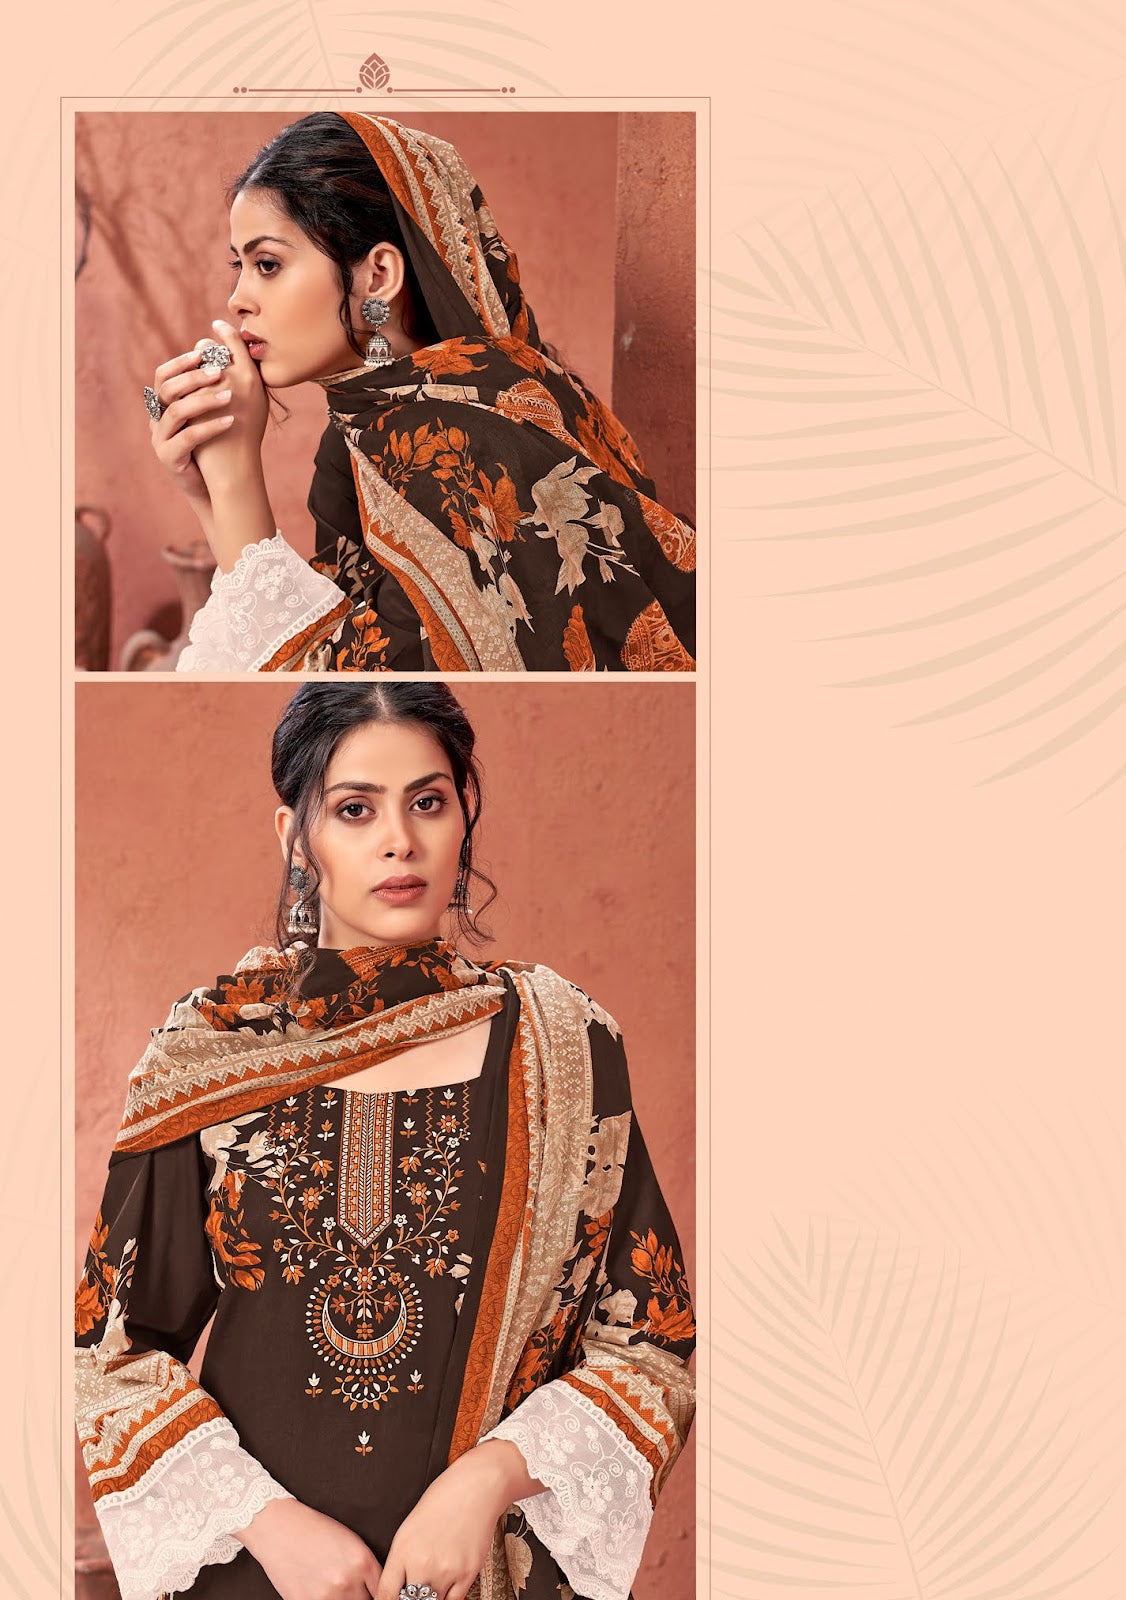 Elliza Vol 17 Jash Karachi Salwar Suits